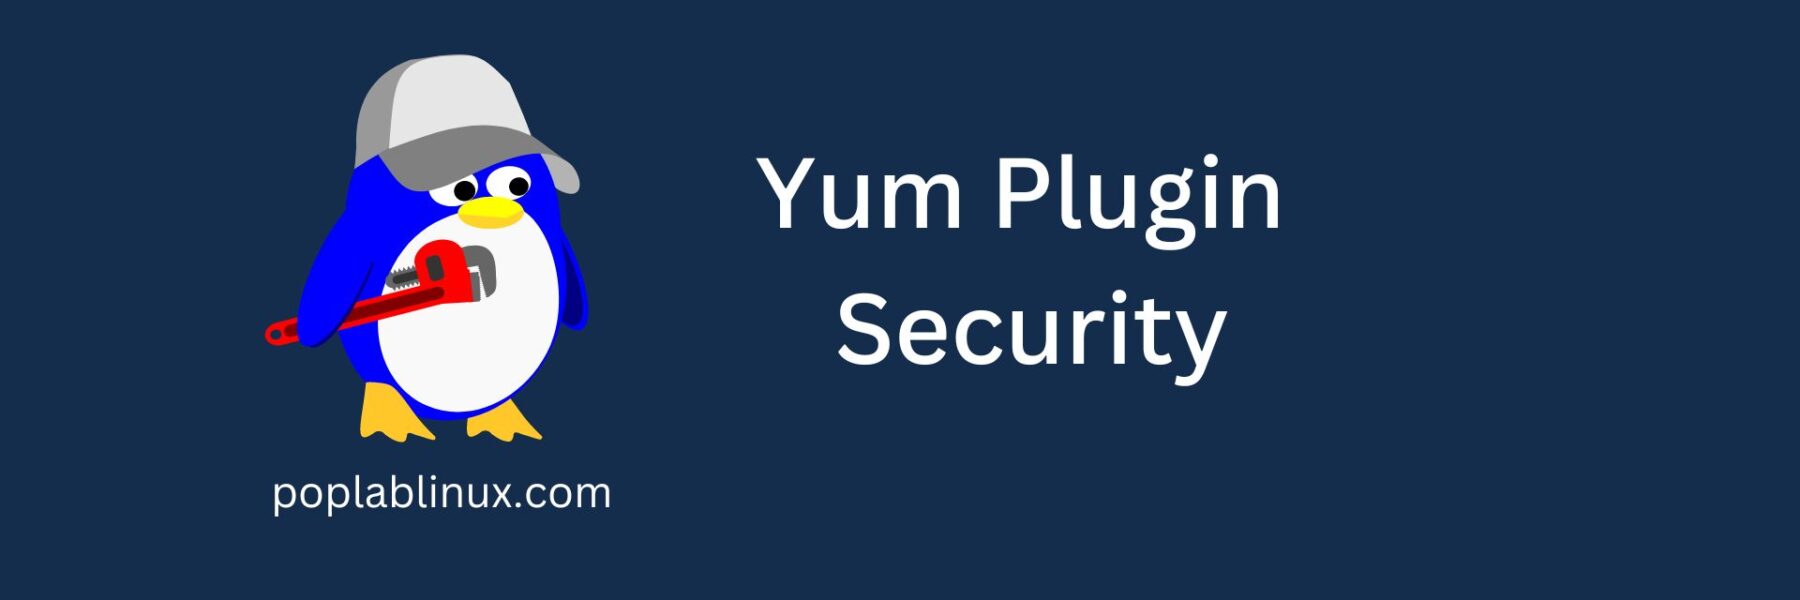 Yum Plugin Security